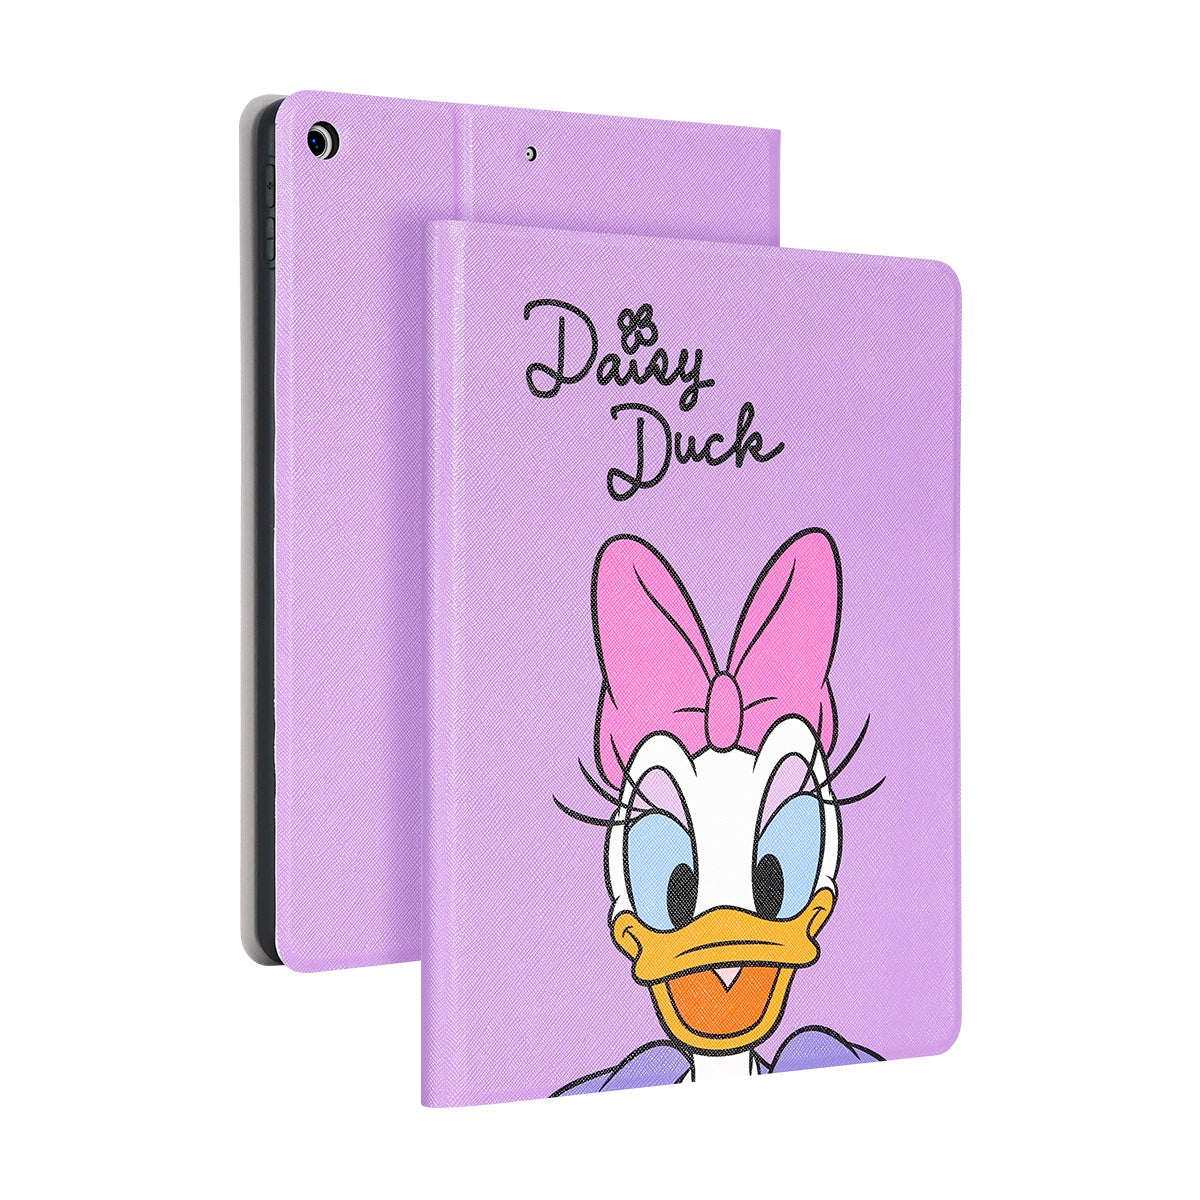 UKA Disney Auto Sleep Folio Stand Leather Case with Pen Tray for Apple iPad